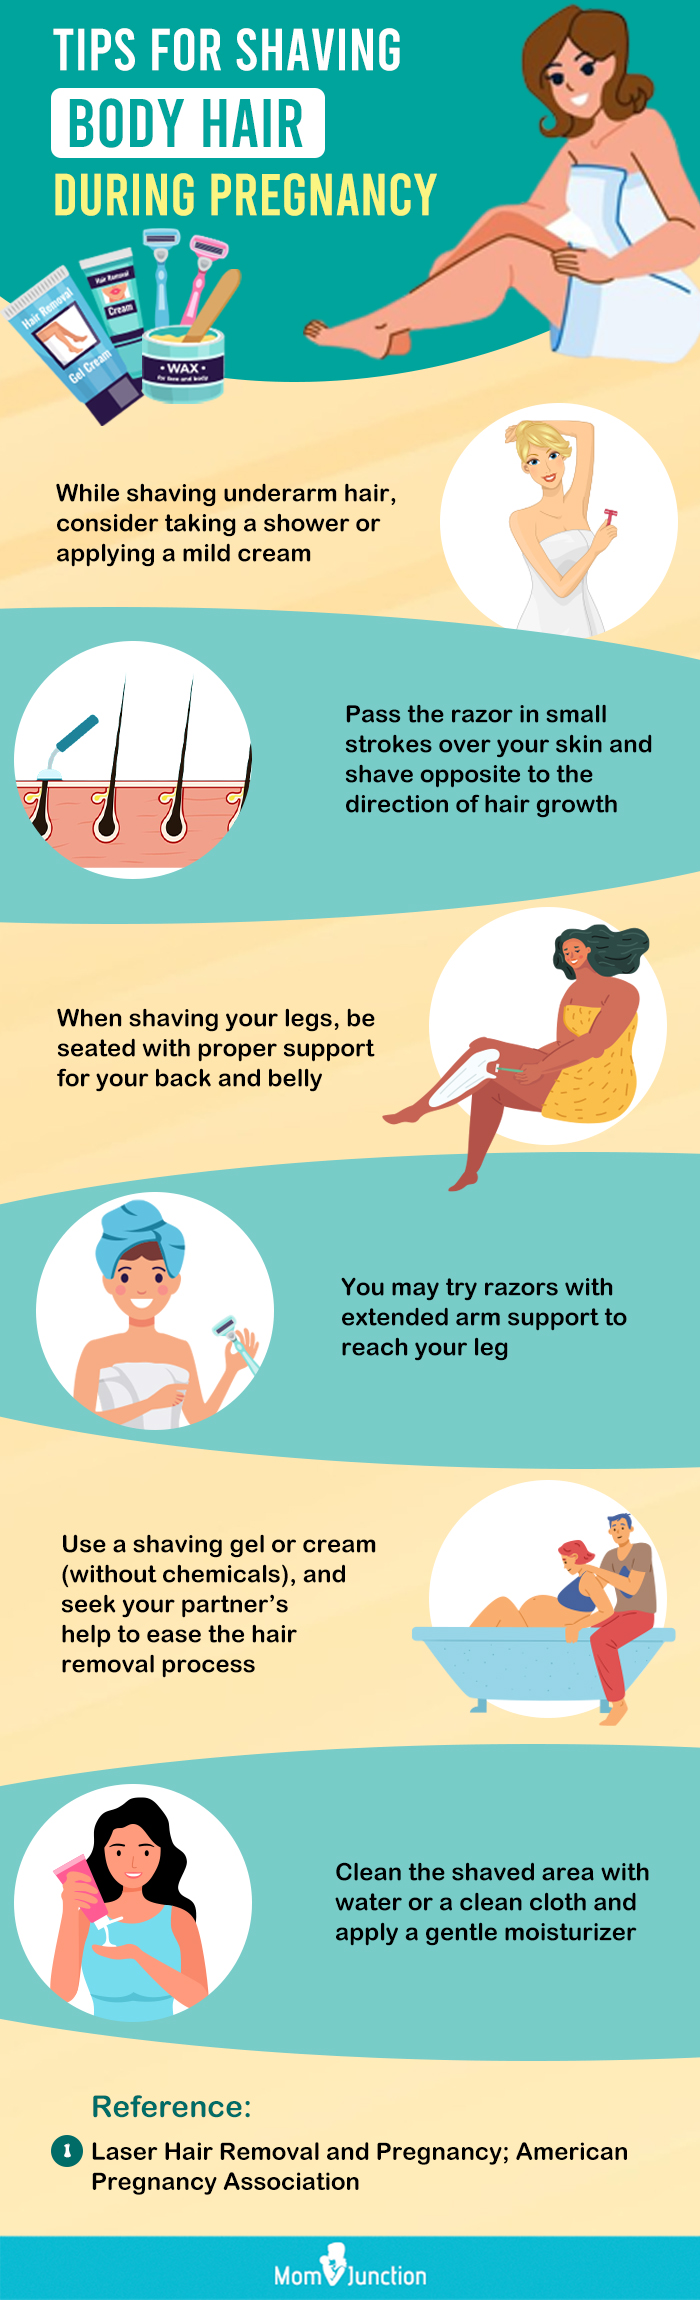 tips for shaving body hair during pregnancy [infographic]